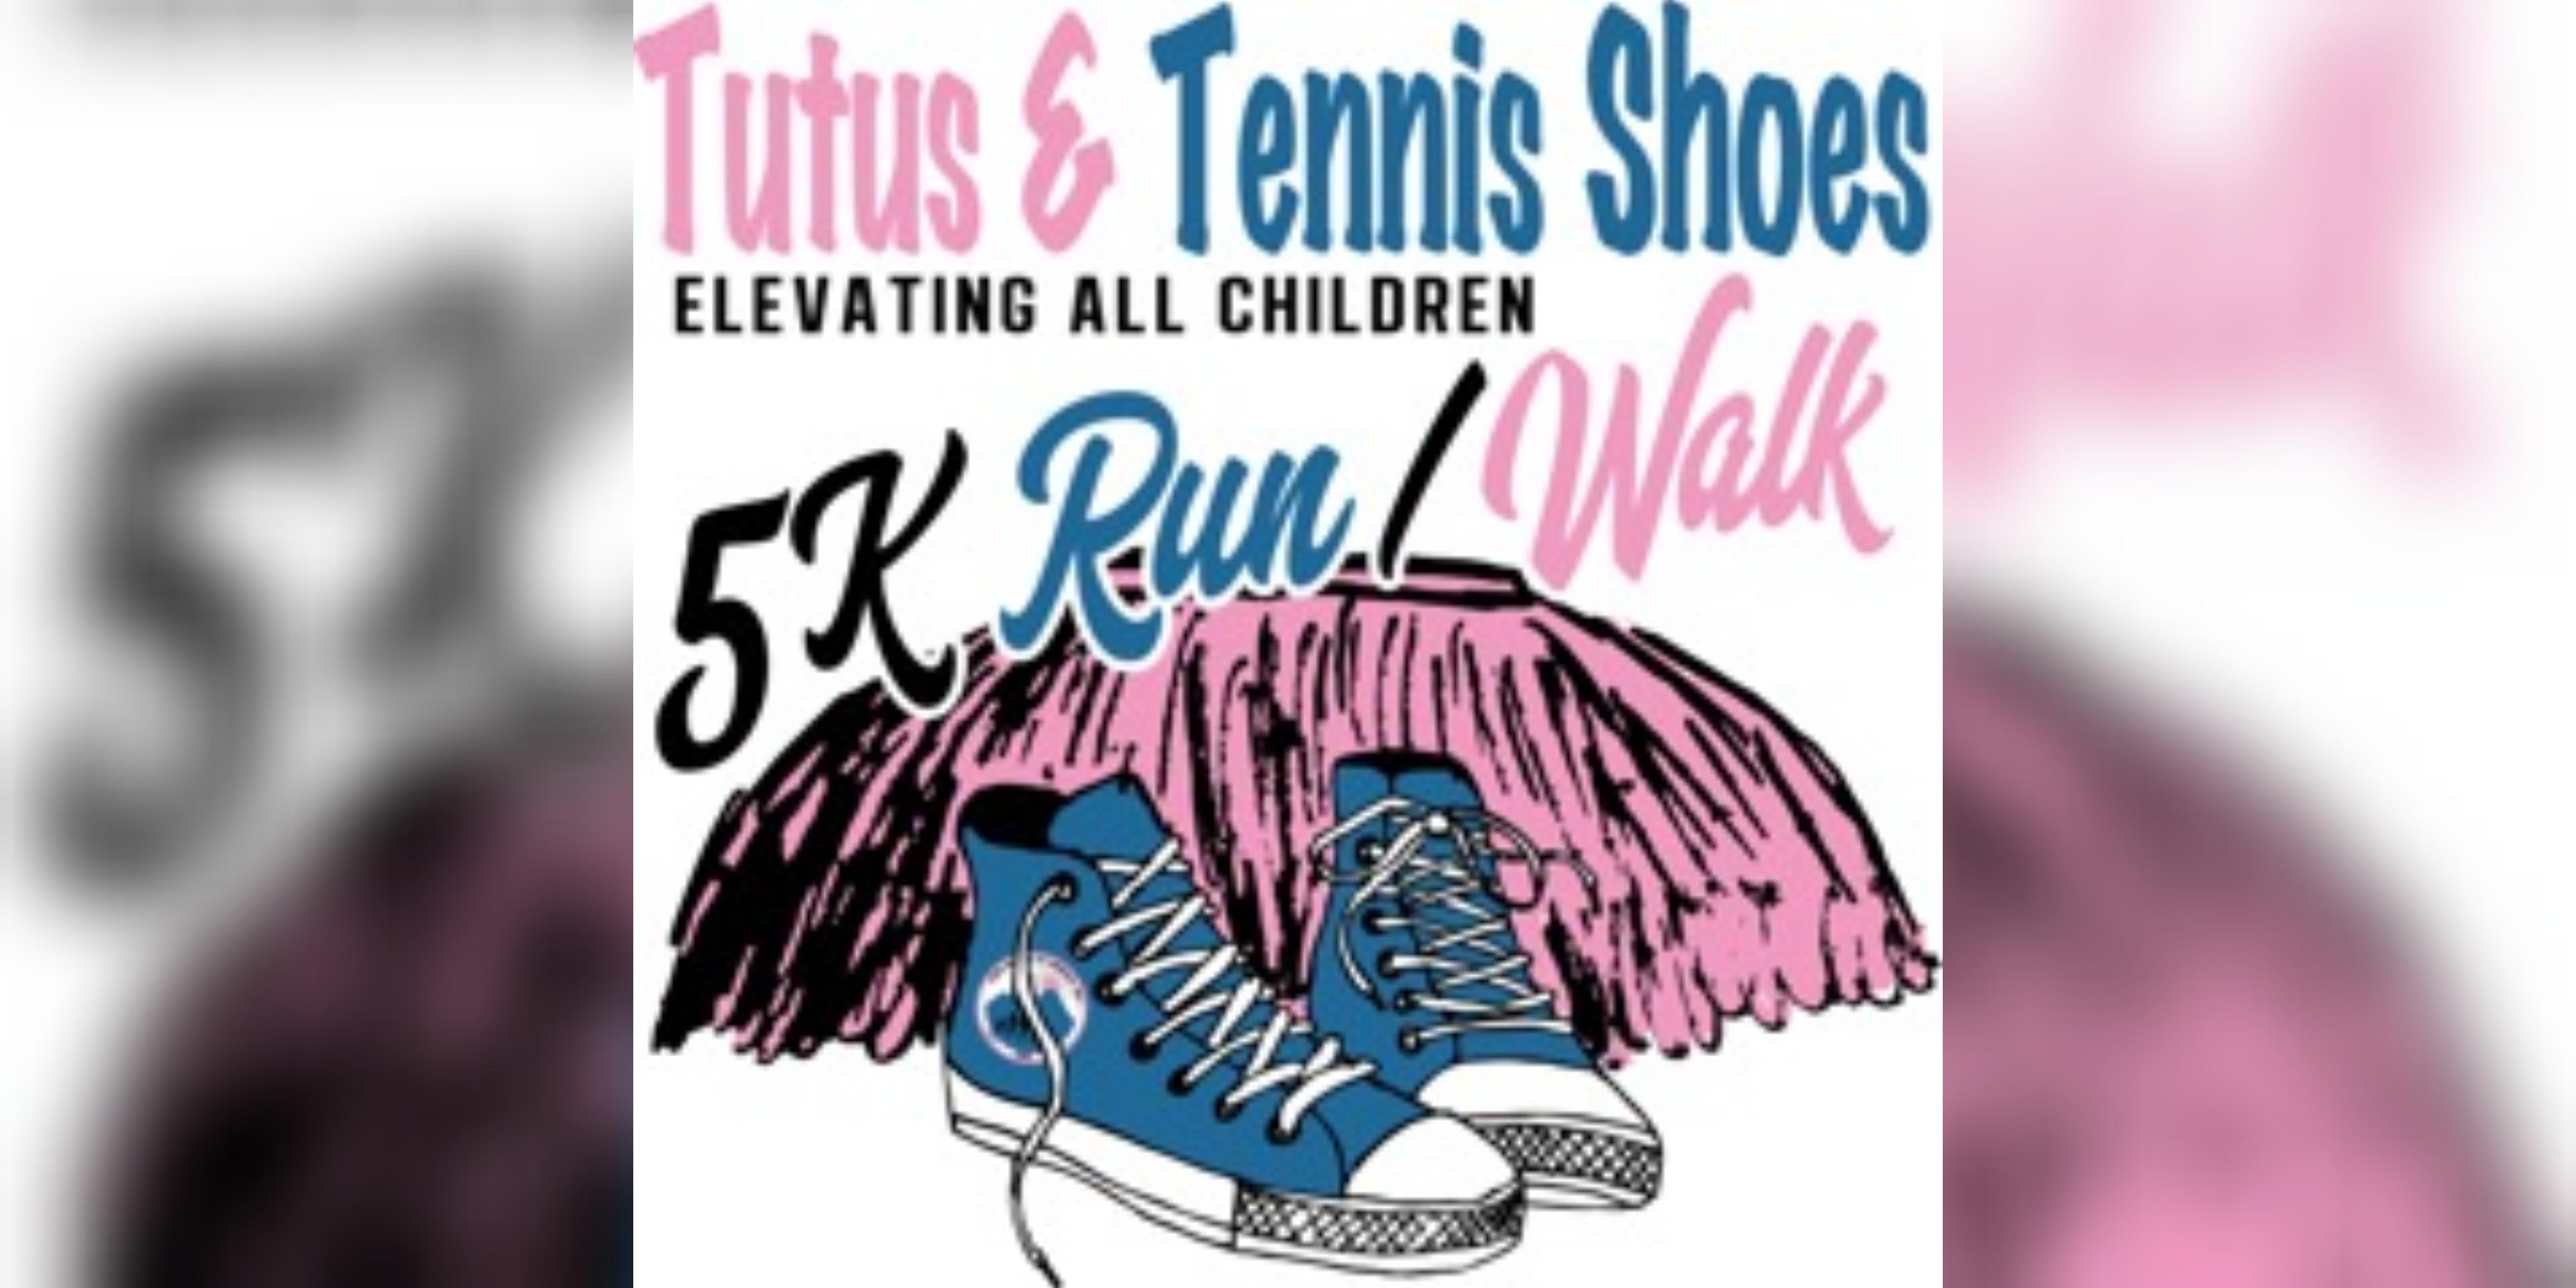 GTC Jack and Jill:Tutus & Tennis Shoes 5K Run/Walk - Elevating All Children